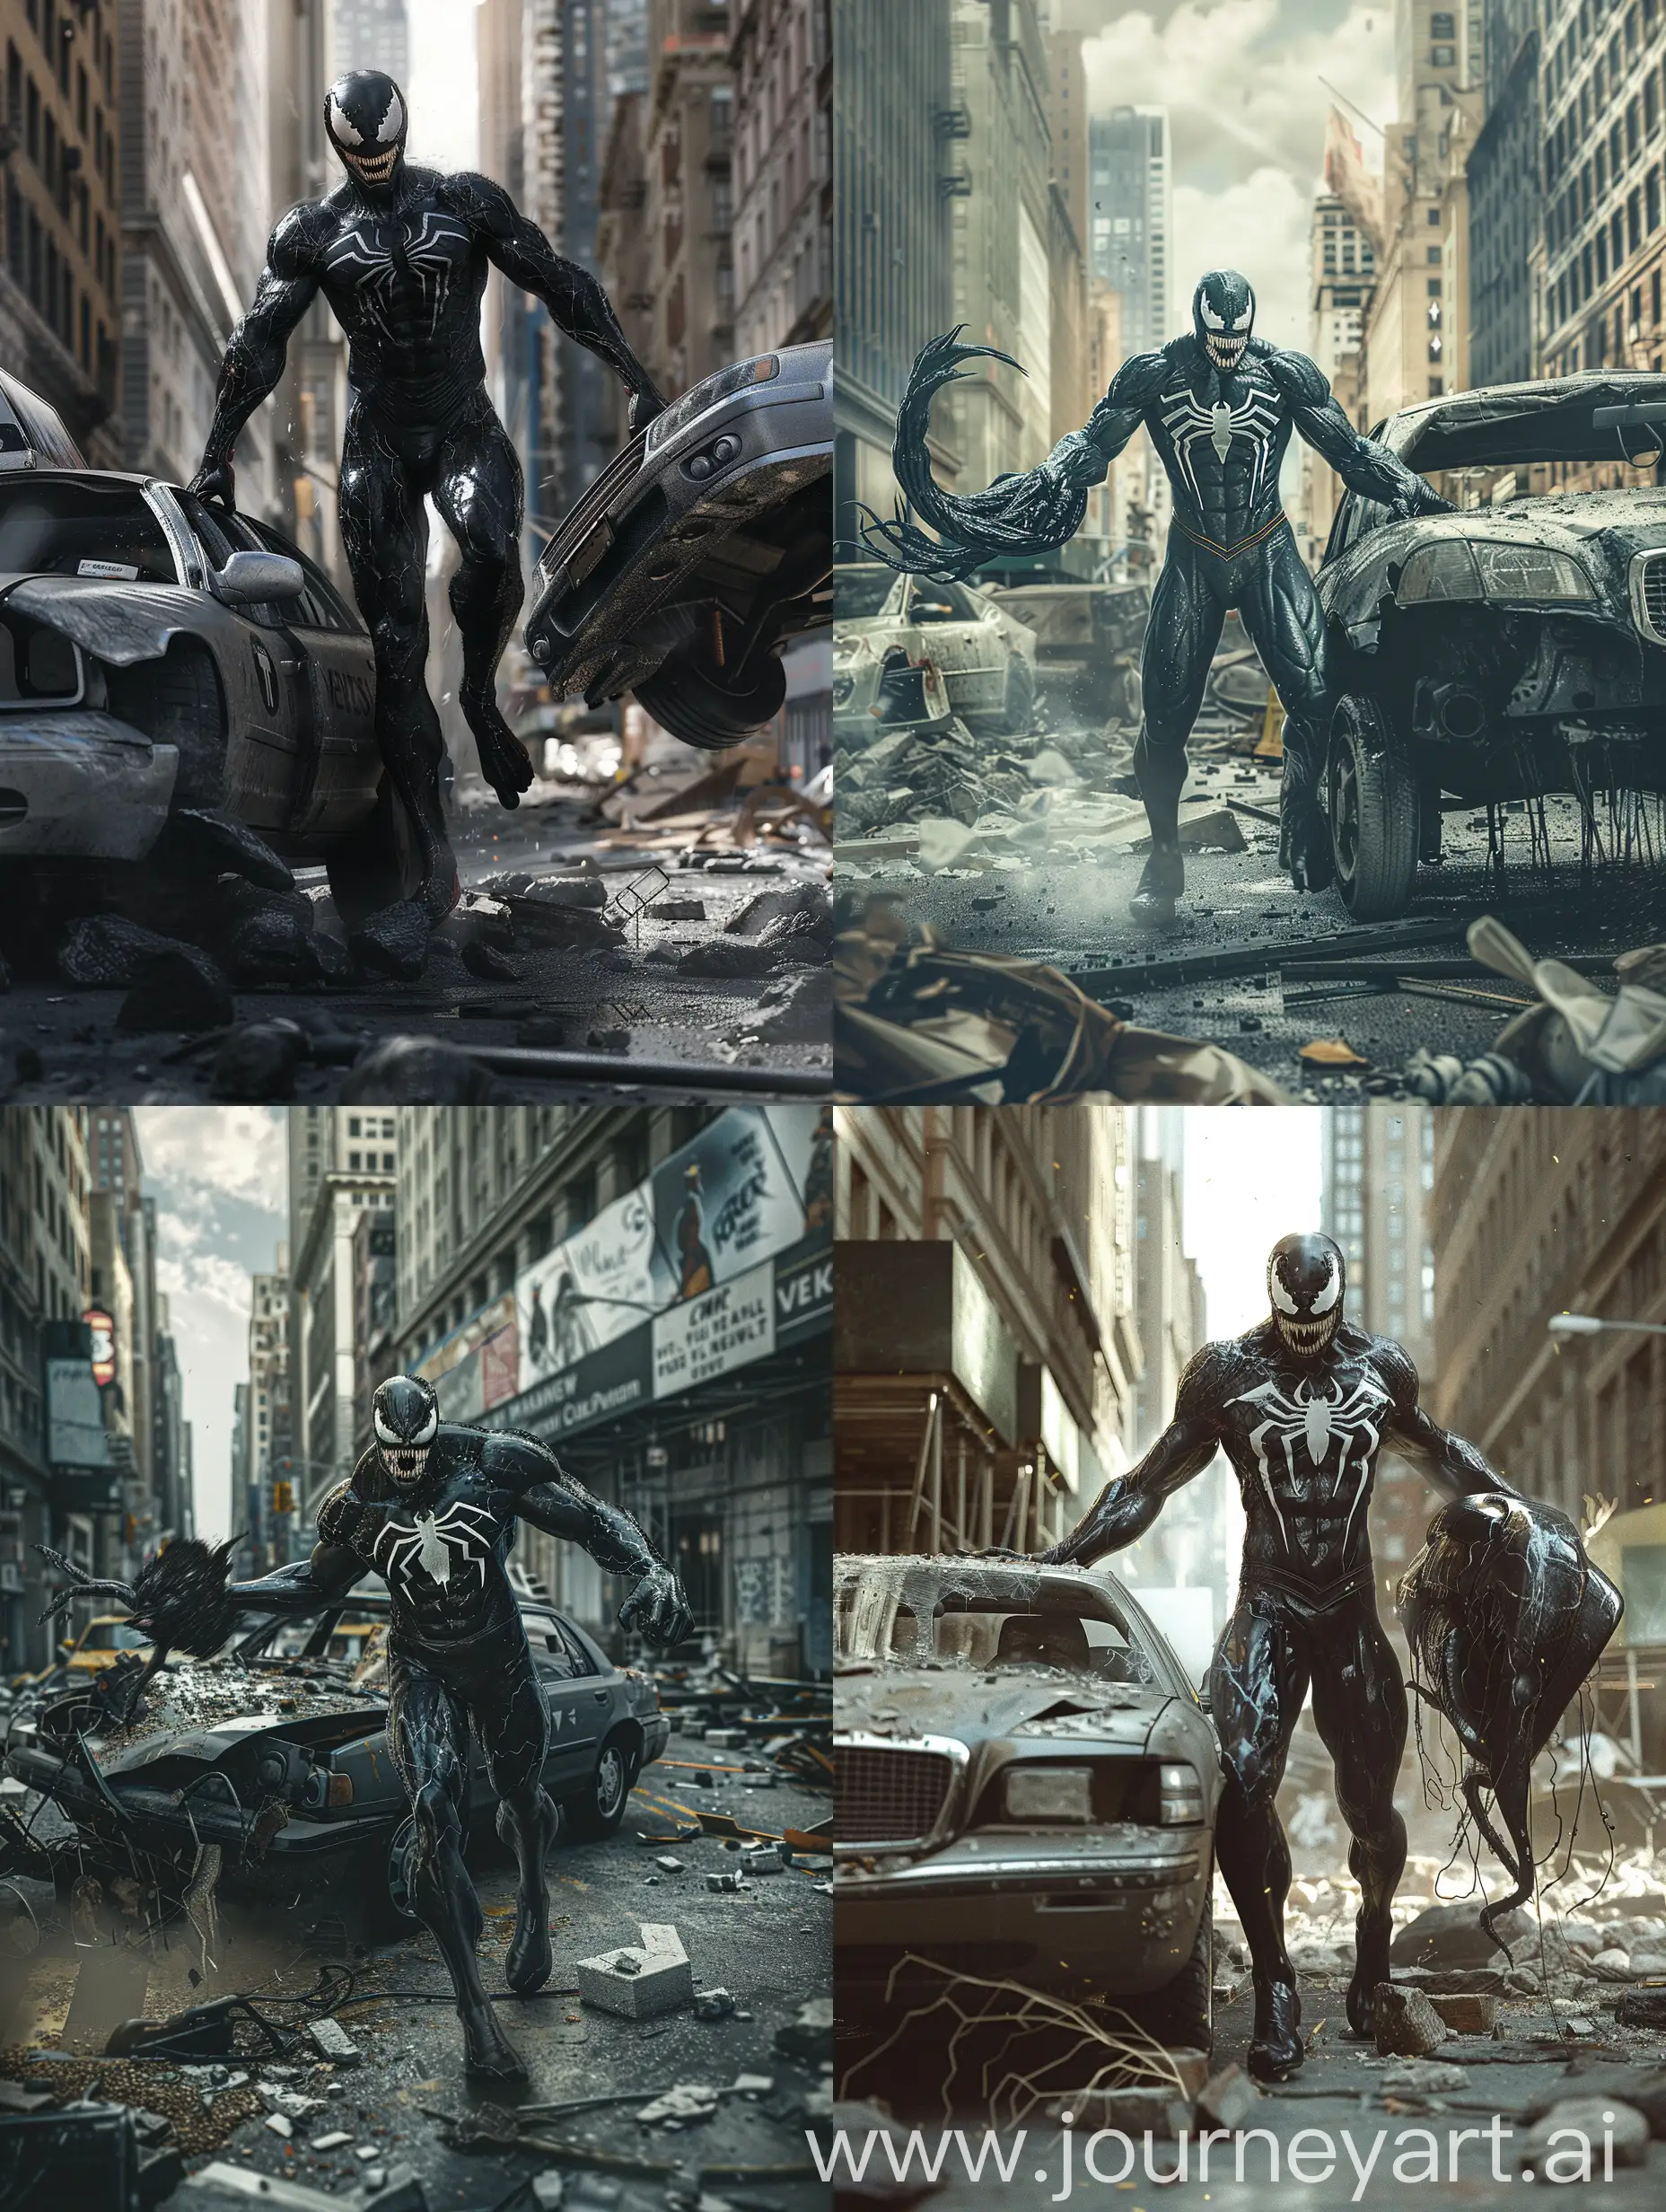 Venomous-SpiderMan-NWH-Fury-Rampaging-Through-Devastated-New-York-City